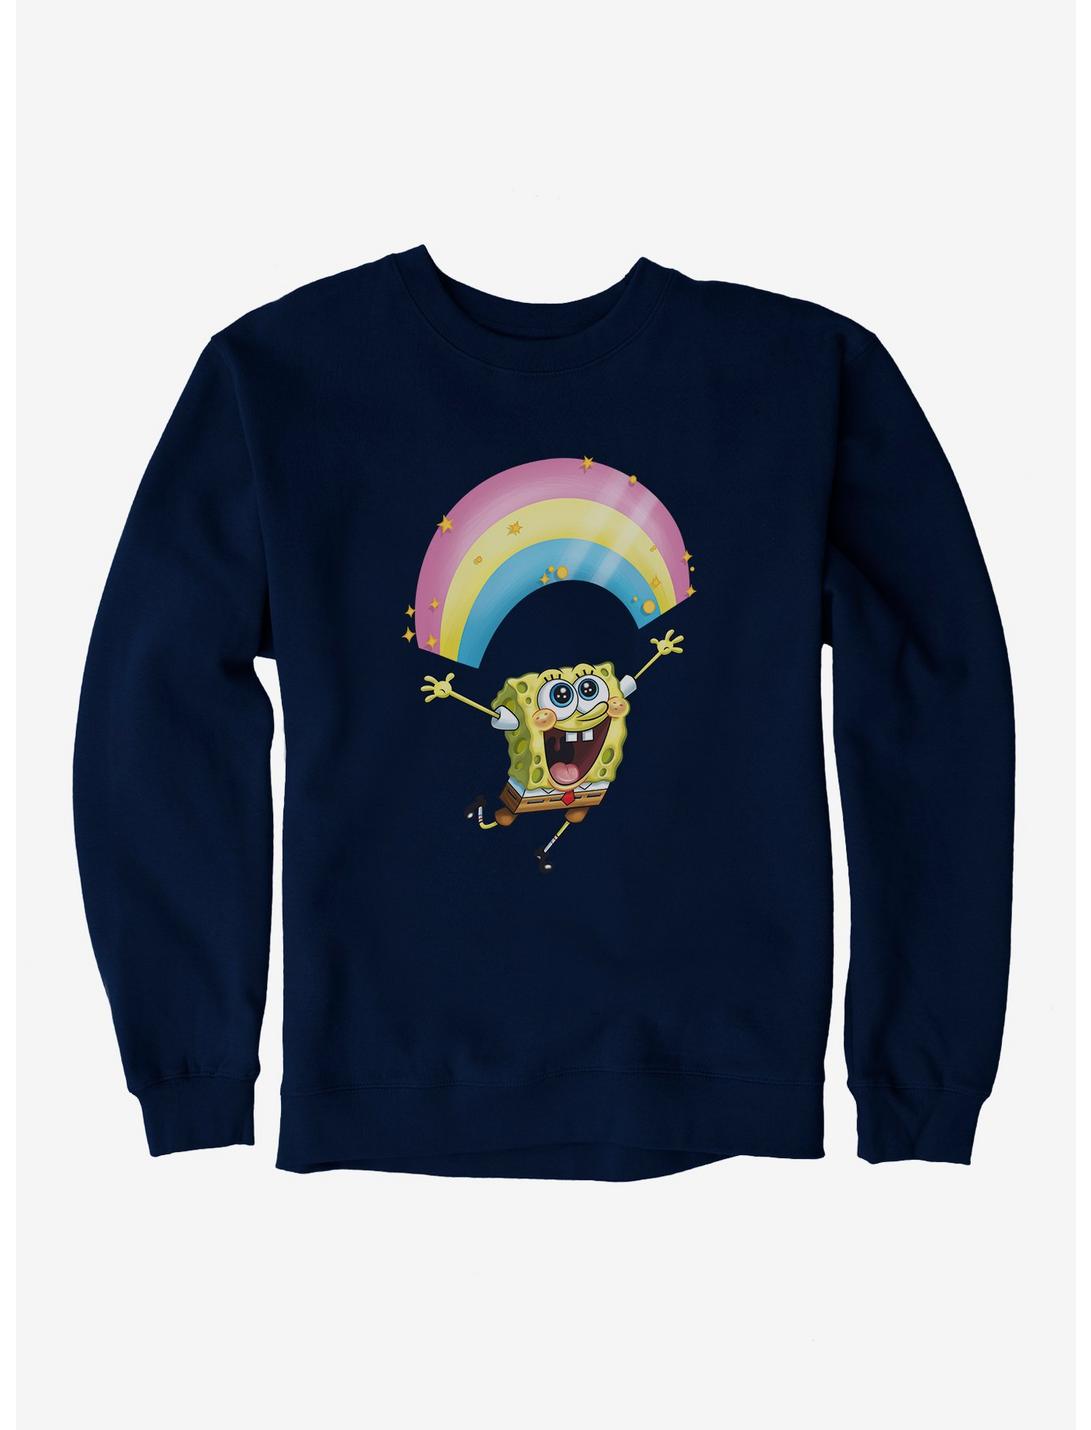 SpongeBob SquarePants Chasing Sparkle Rainbows Black Sweatshirt, NAVY, hi-res